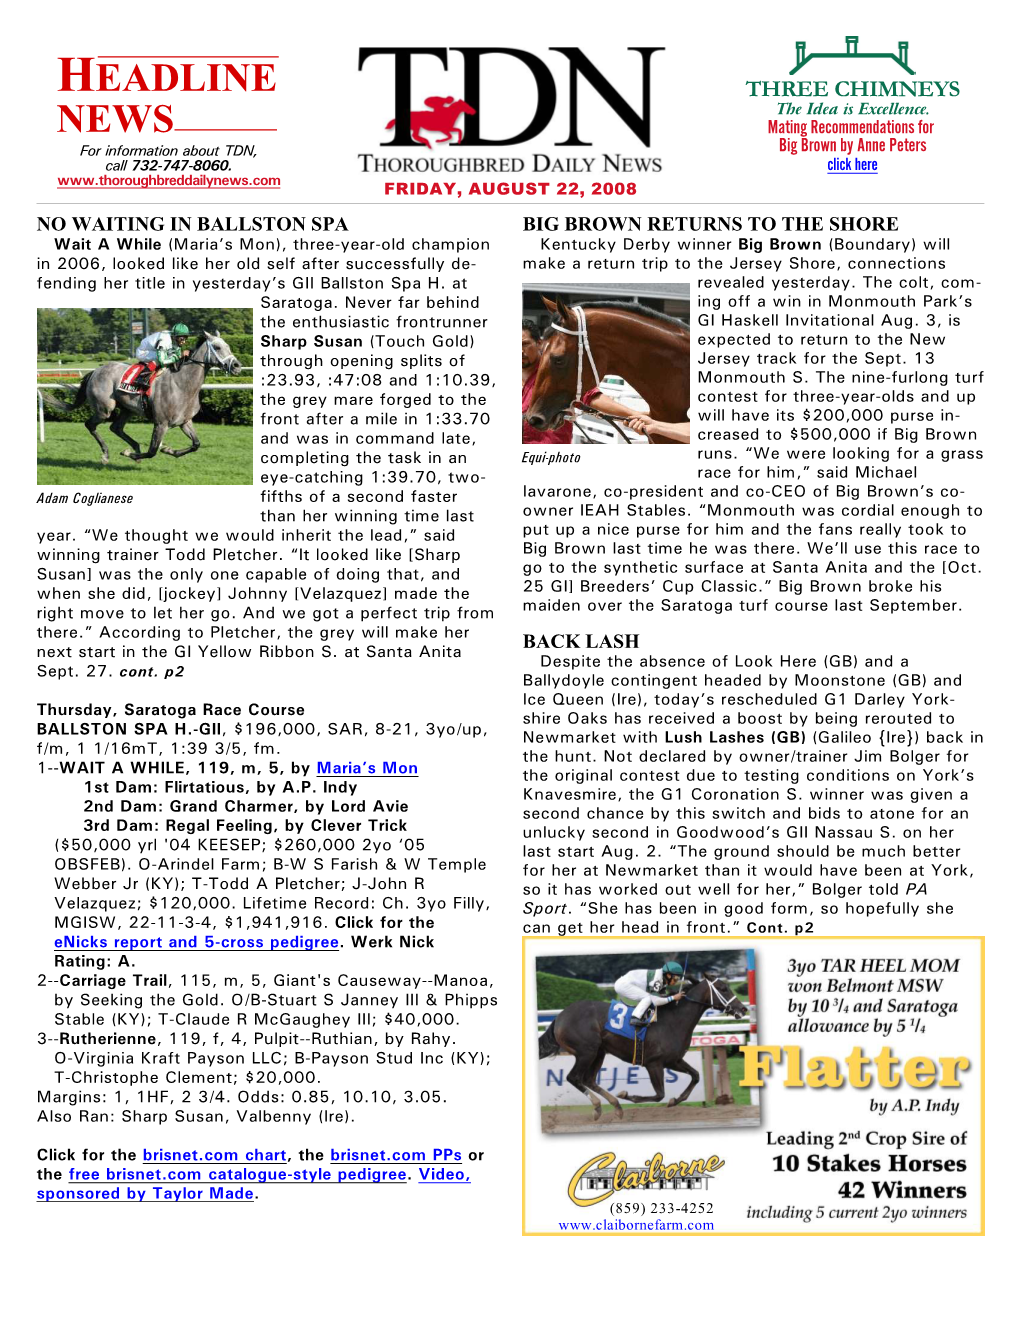 HEADLINE NEWS • 8/22/08 • PAGE 2 of 9